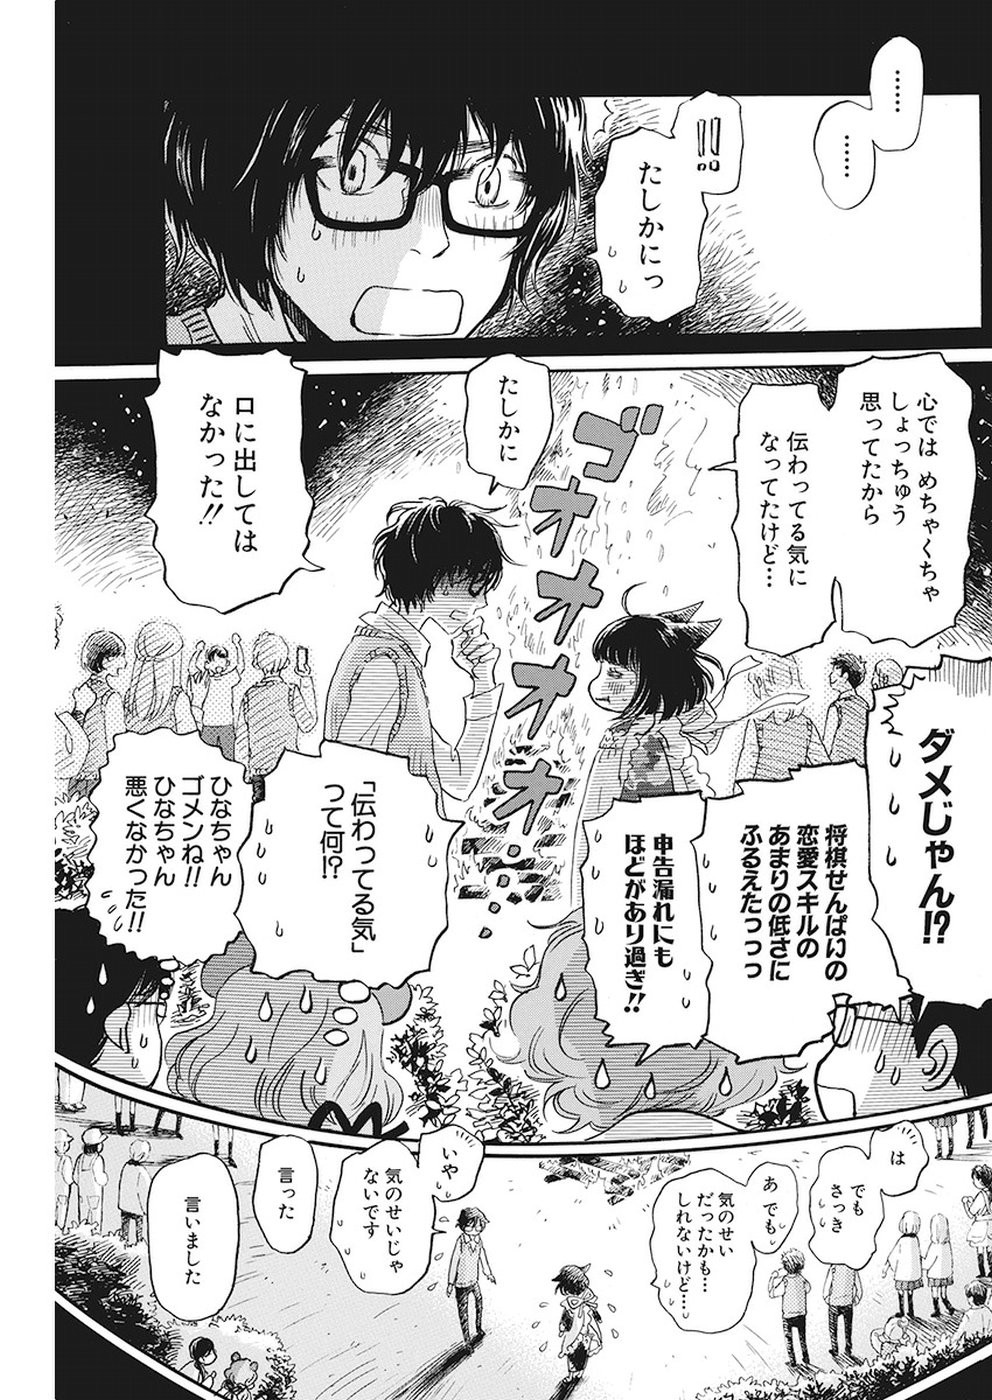 3 Gatsu no Lion - Chapter 155 - Page 9